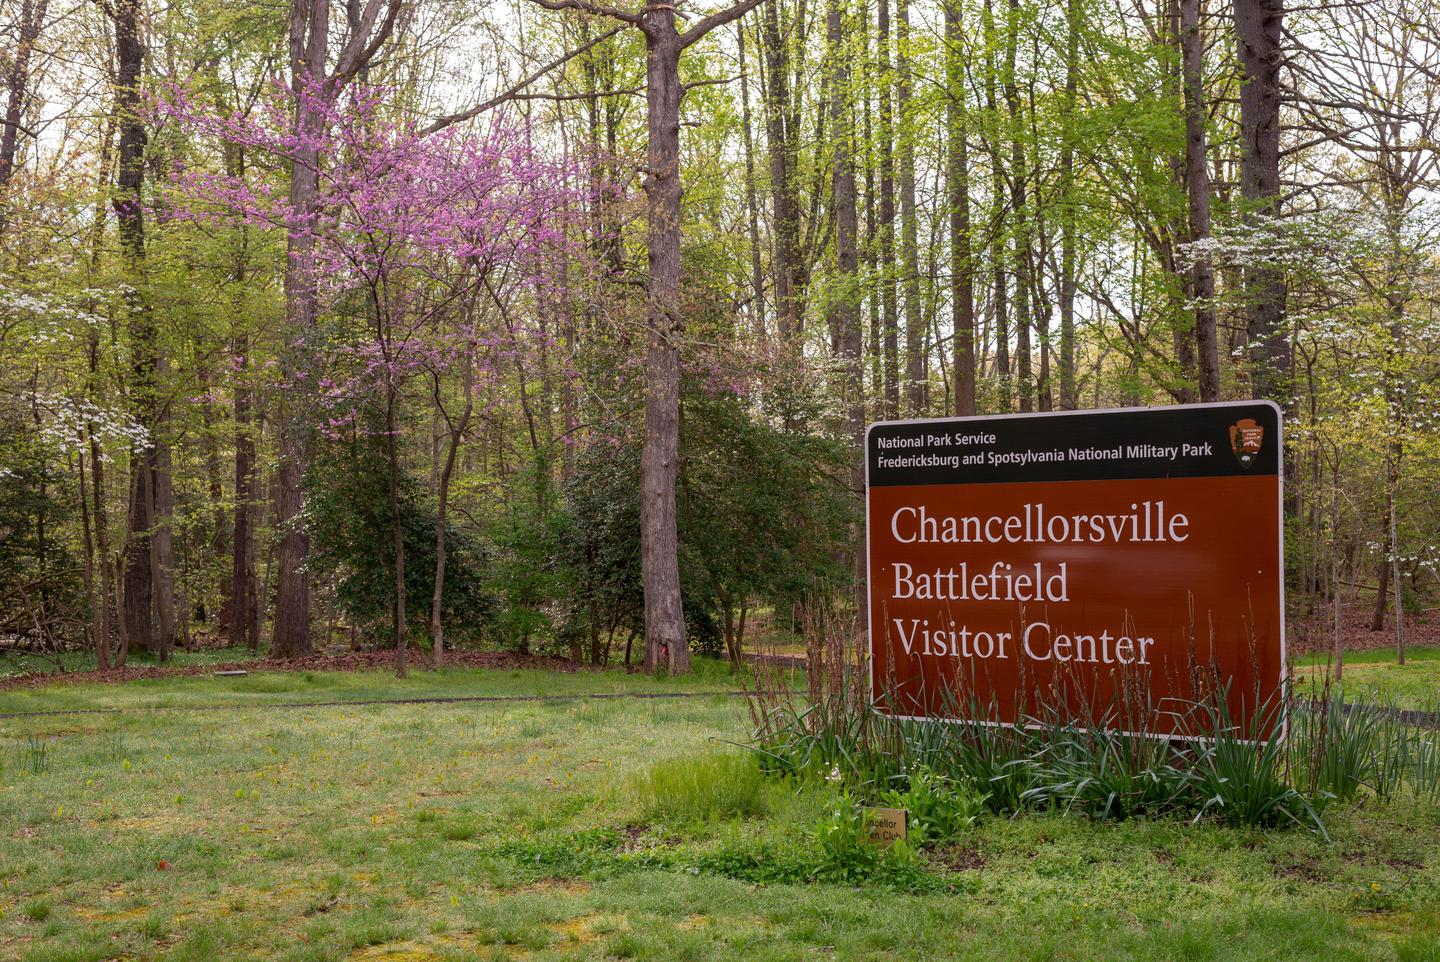 Chancellorsville Battlefield Visitor Center SignThe entrance sign for the Chancellorsville Battlefield Visitor Center welcome visitors from near and far.